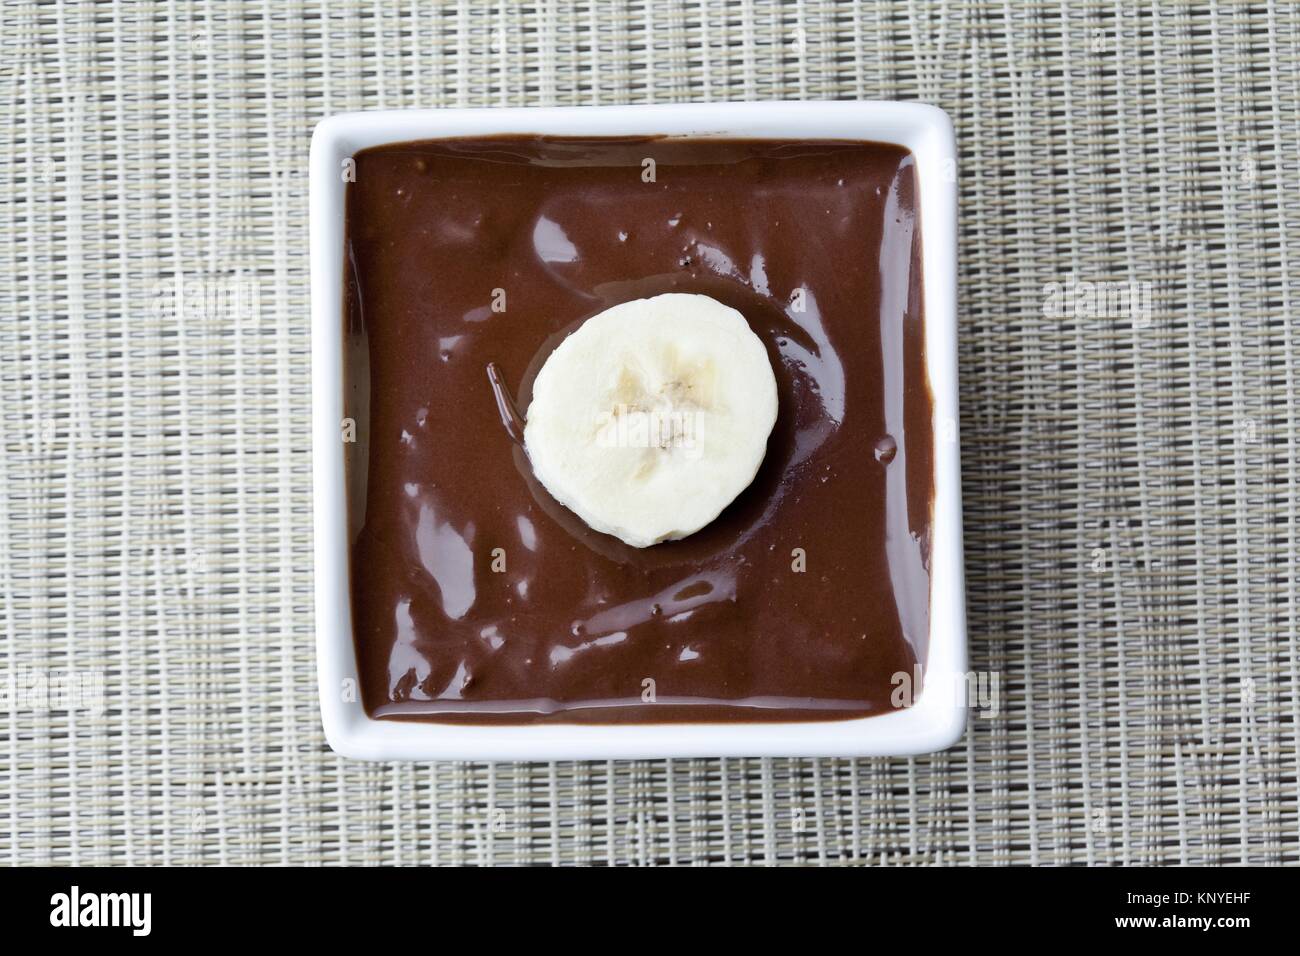 banana slice in chocolate syrup Stock Photo